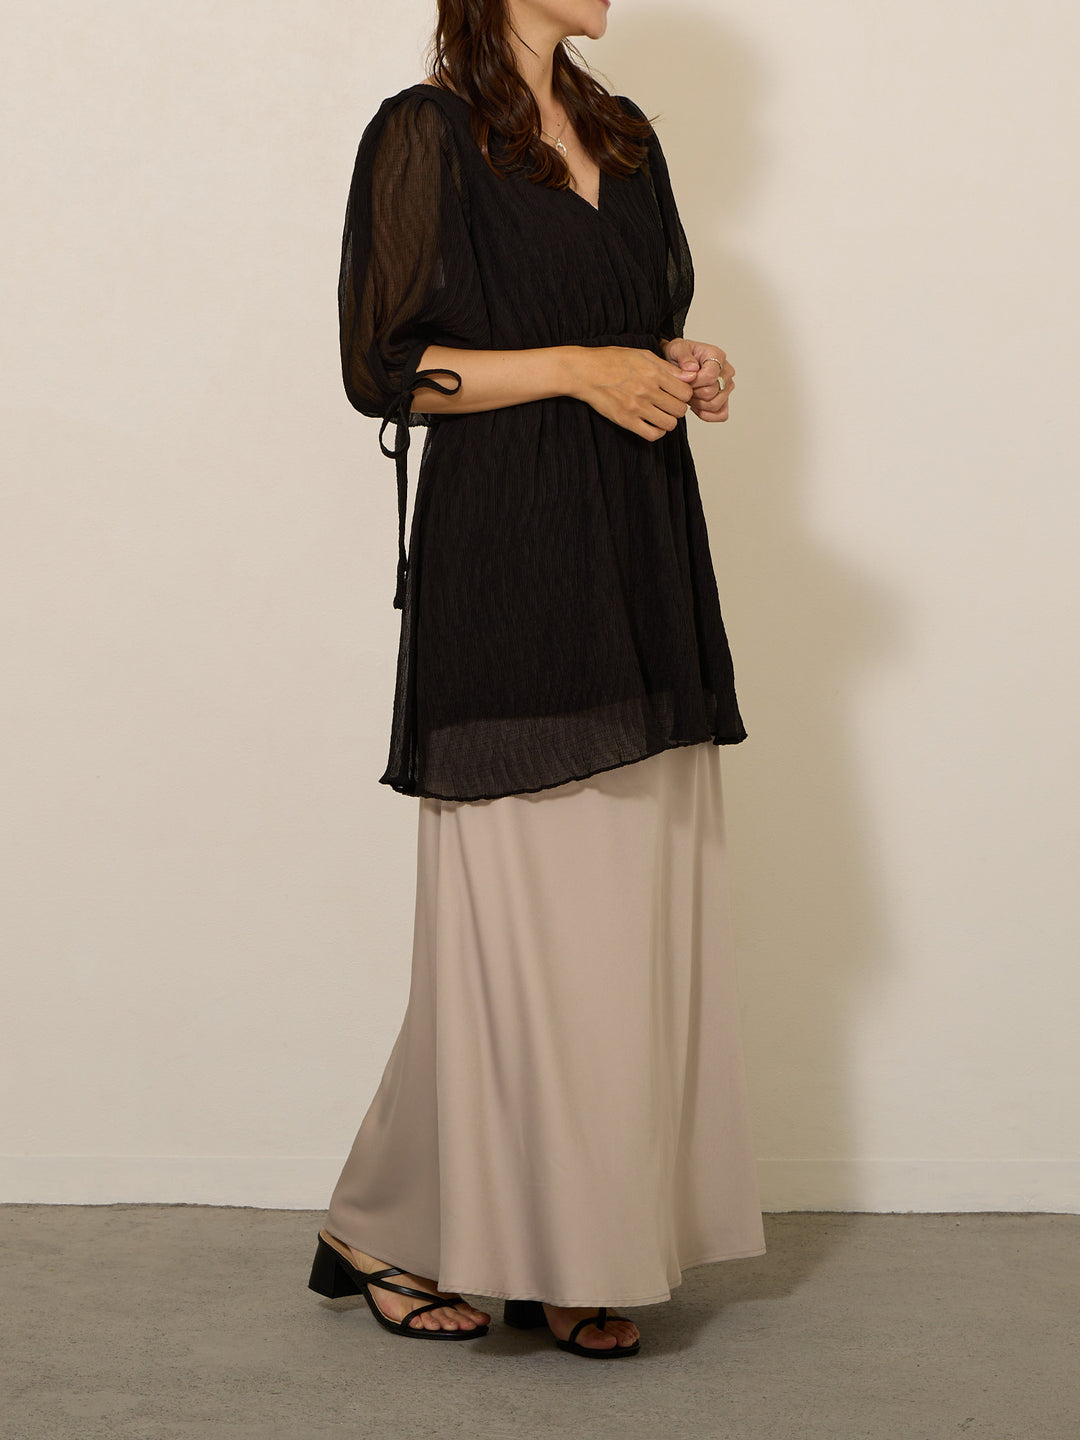 [Maternity/Nursing Clothes] Cache-coeur sleeve ribbon blouse Black 